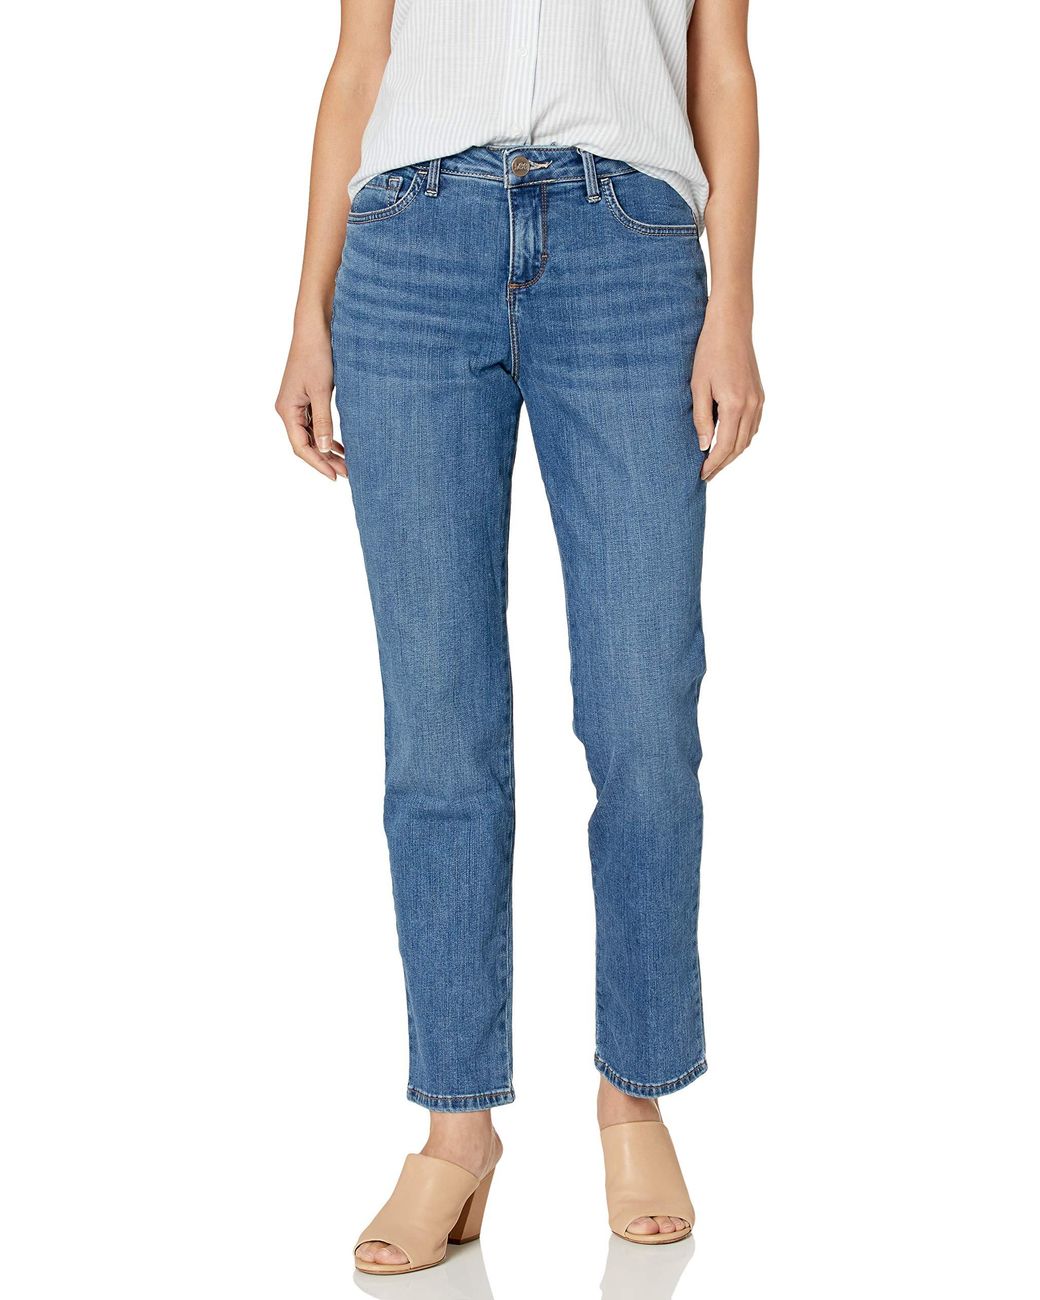 Lee Jeans Denim Classic-fit Monroe Straight-leg Jean in Pearl Blue ...